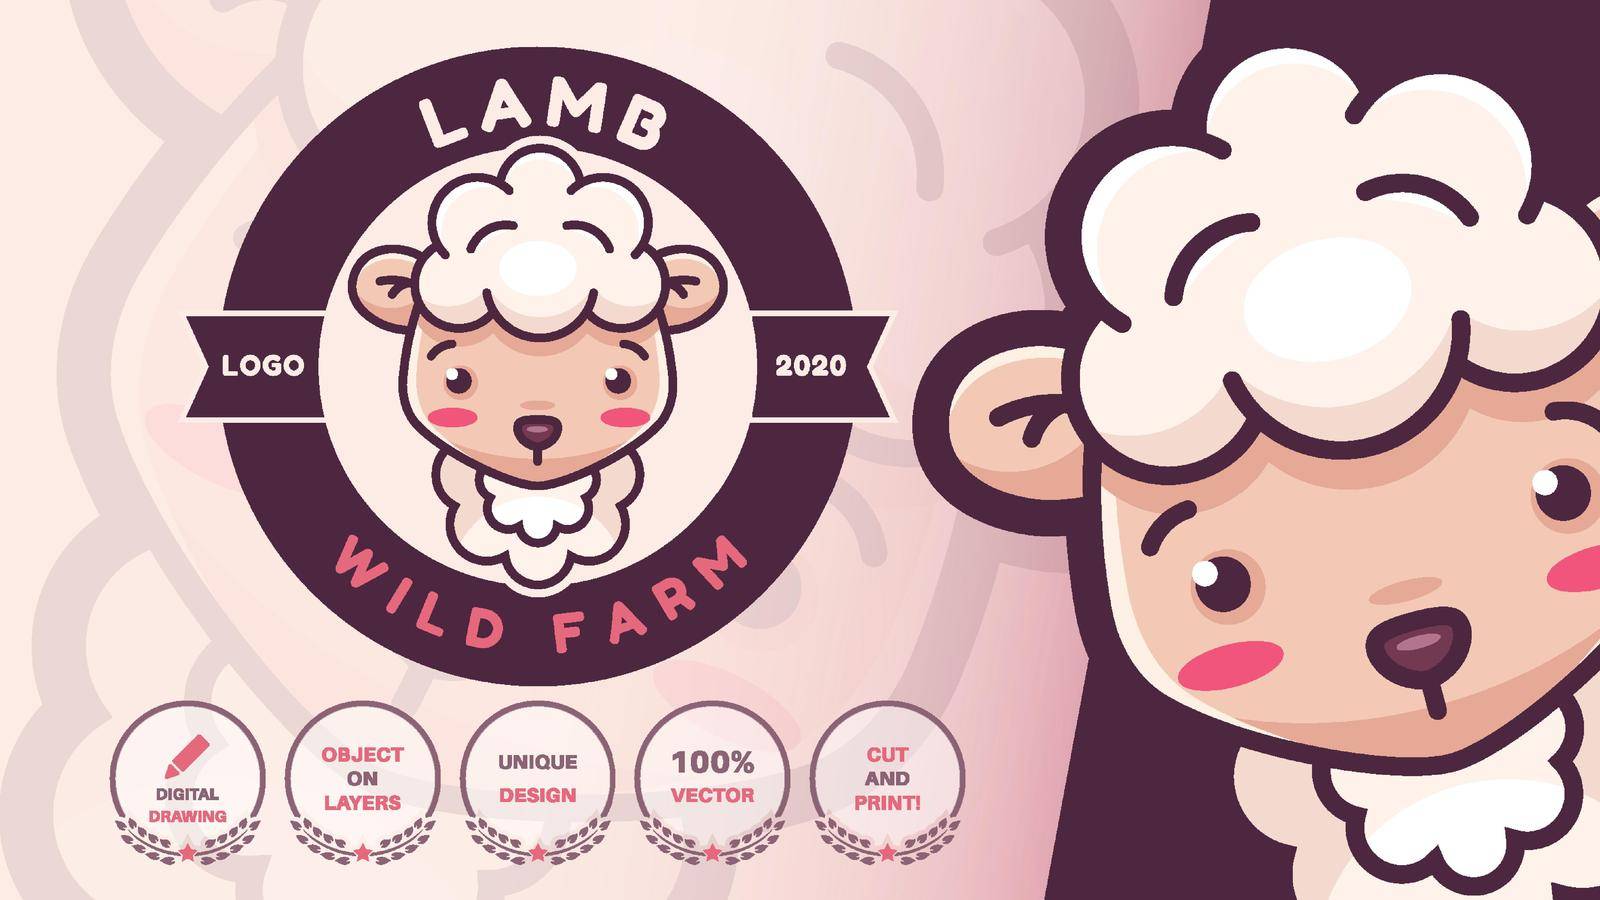 Cartoon character adorable animal lamb logo by rwgusev